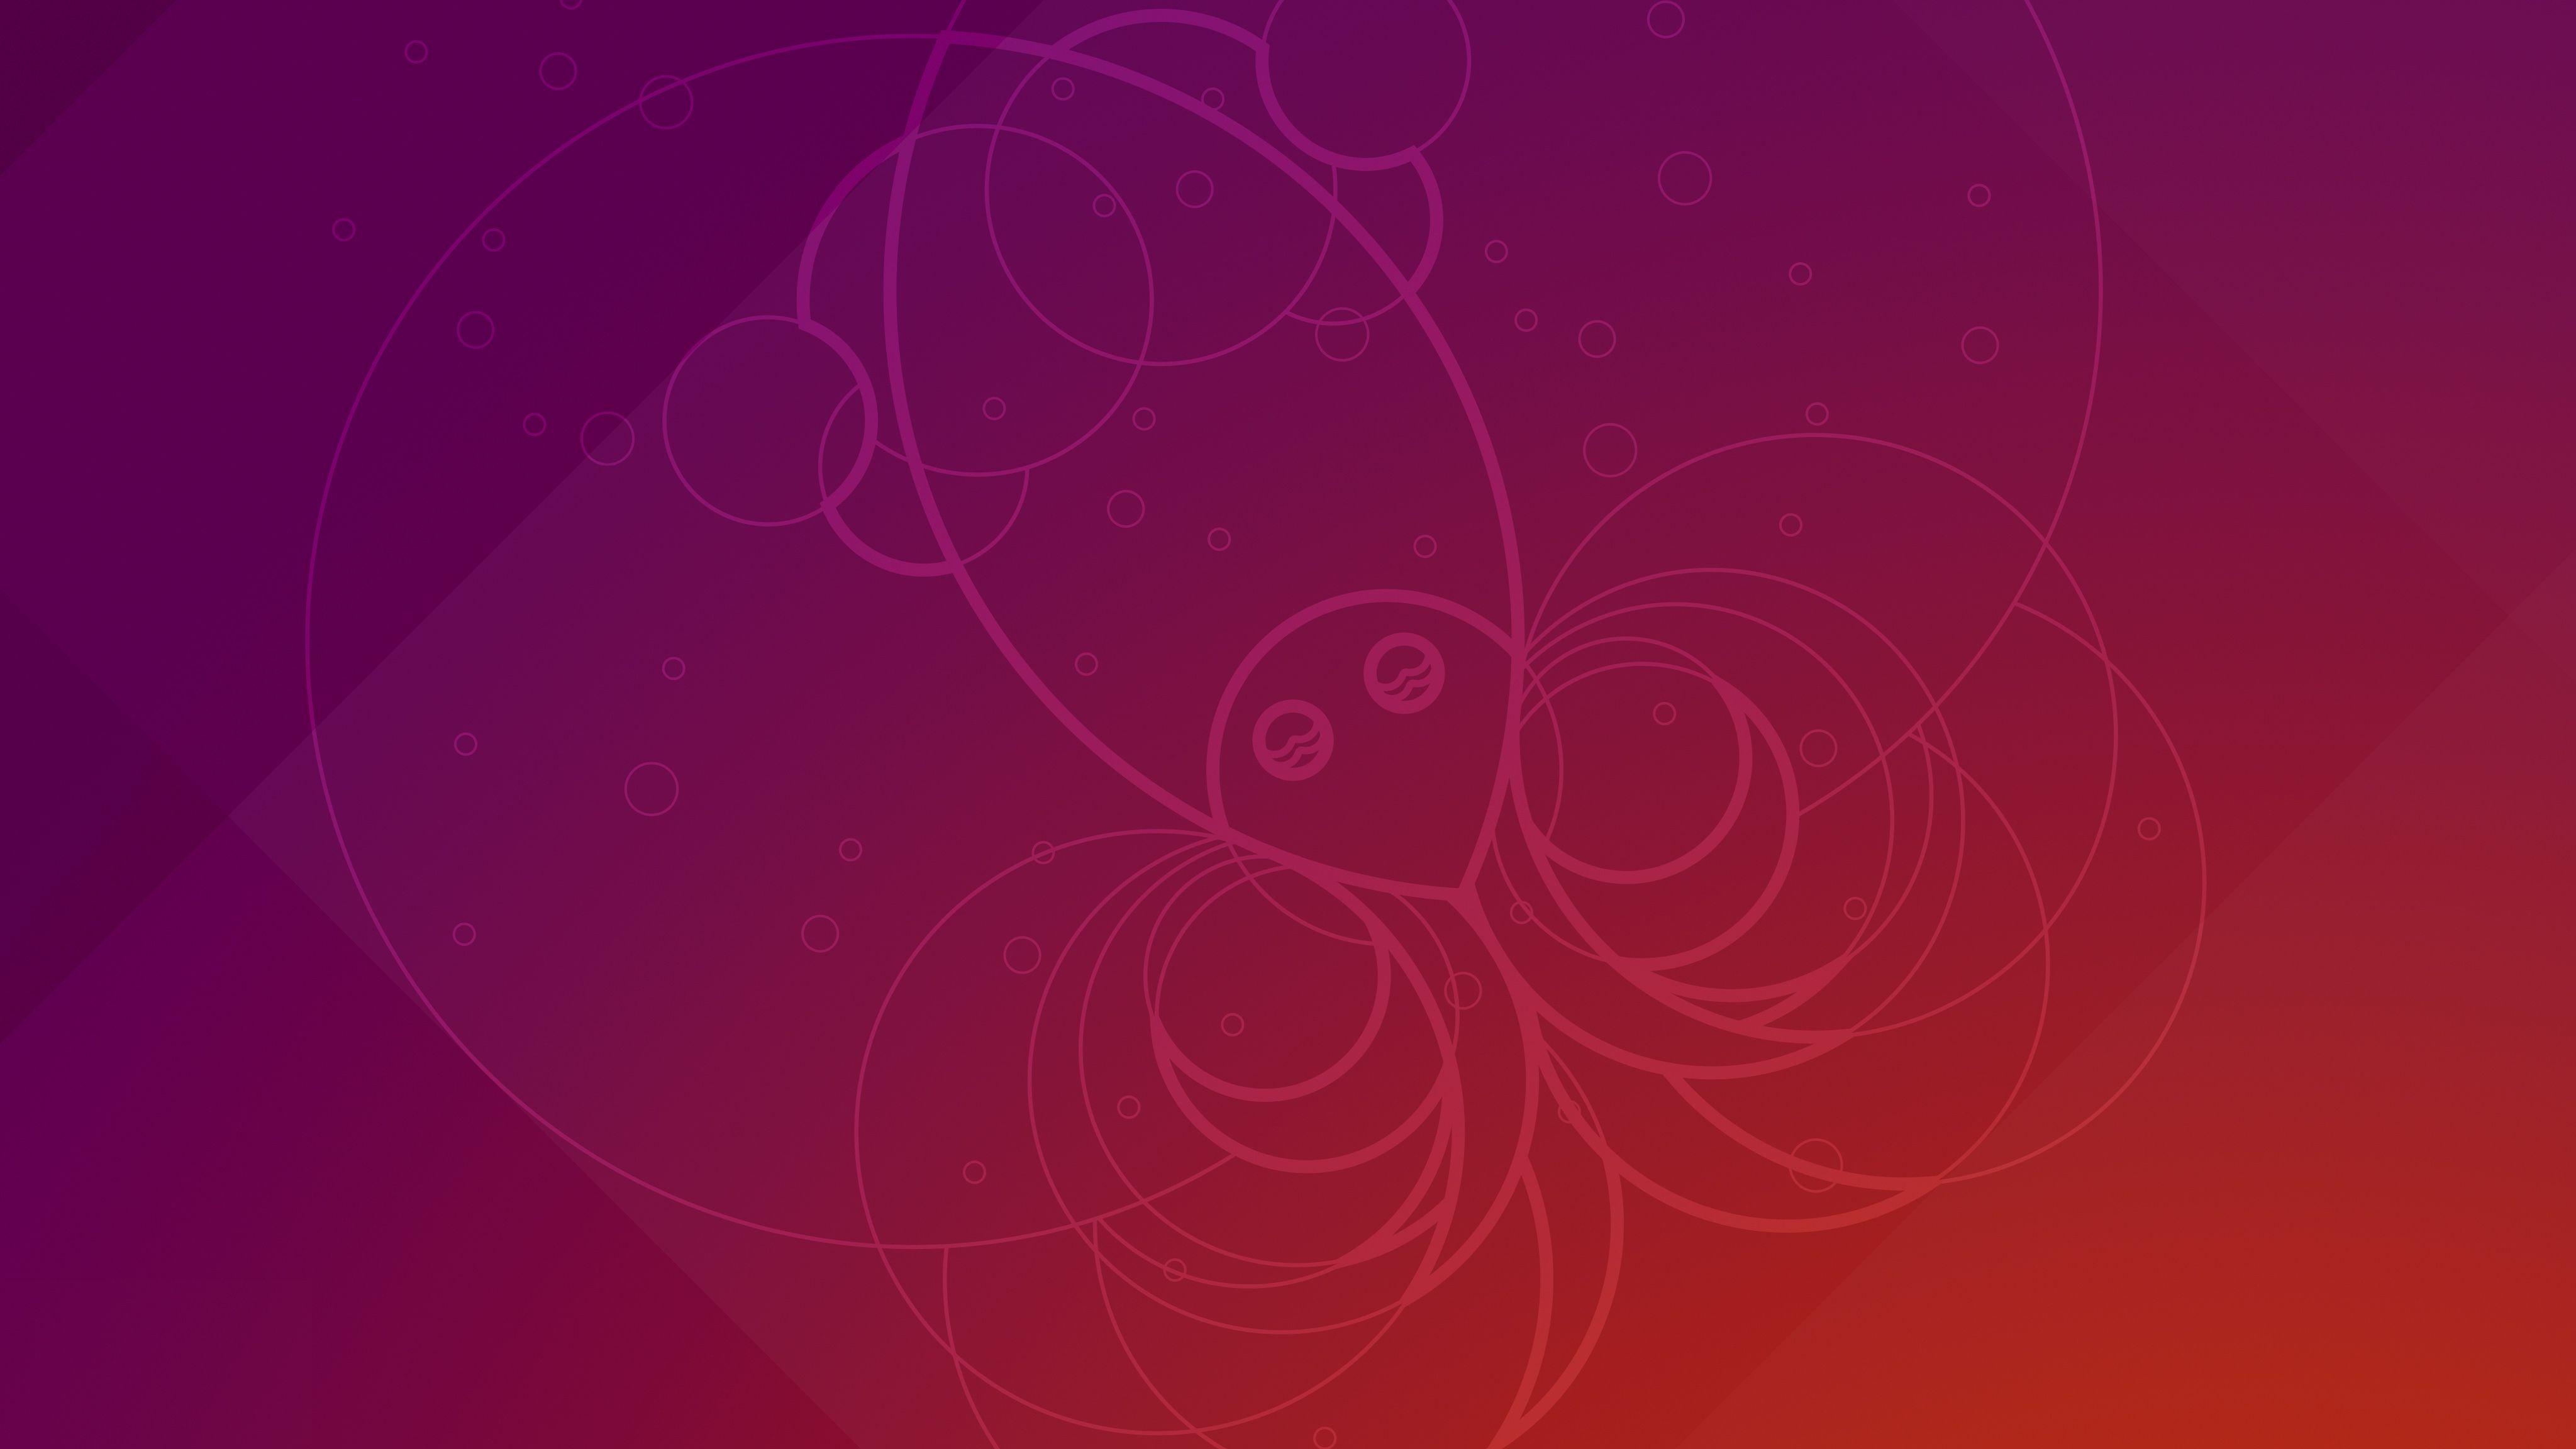 LINUX Cách cài macOS Mojave Dynamic Wallpaper cho Ubuntu 1804  ASUS  Community  Zentalkvn